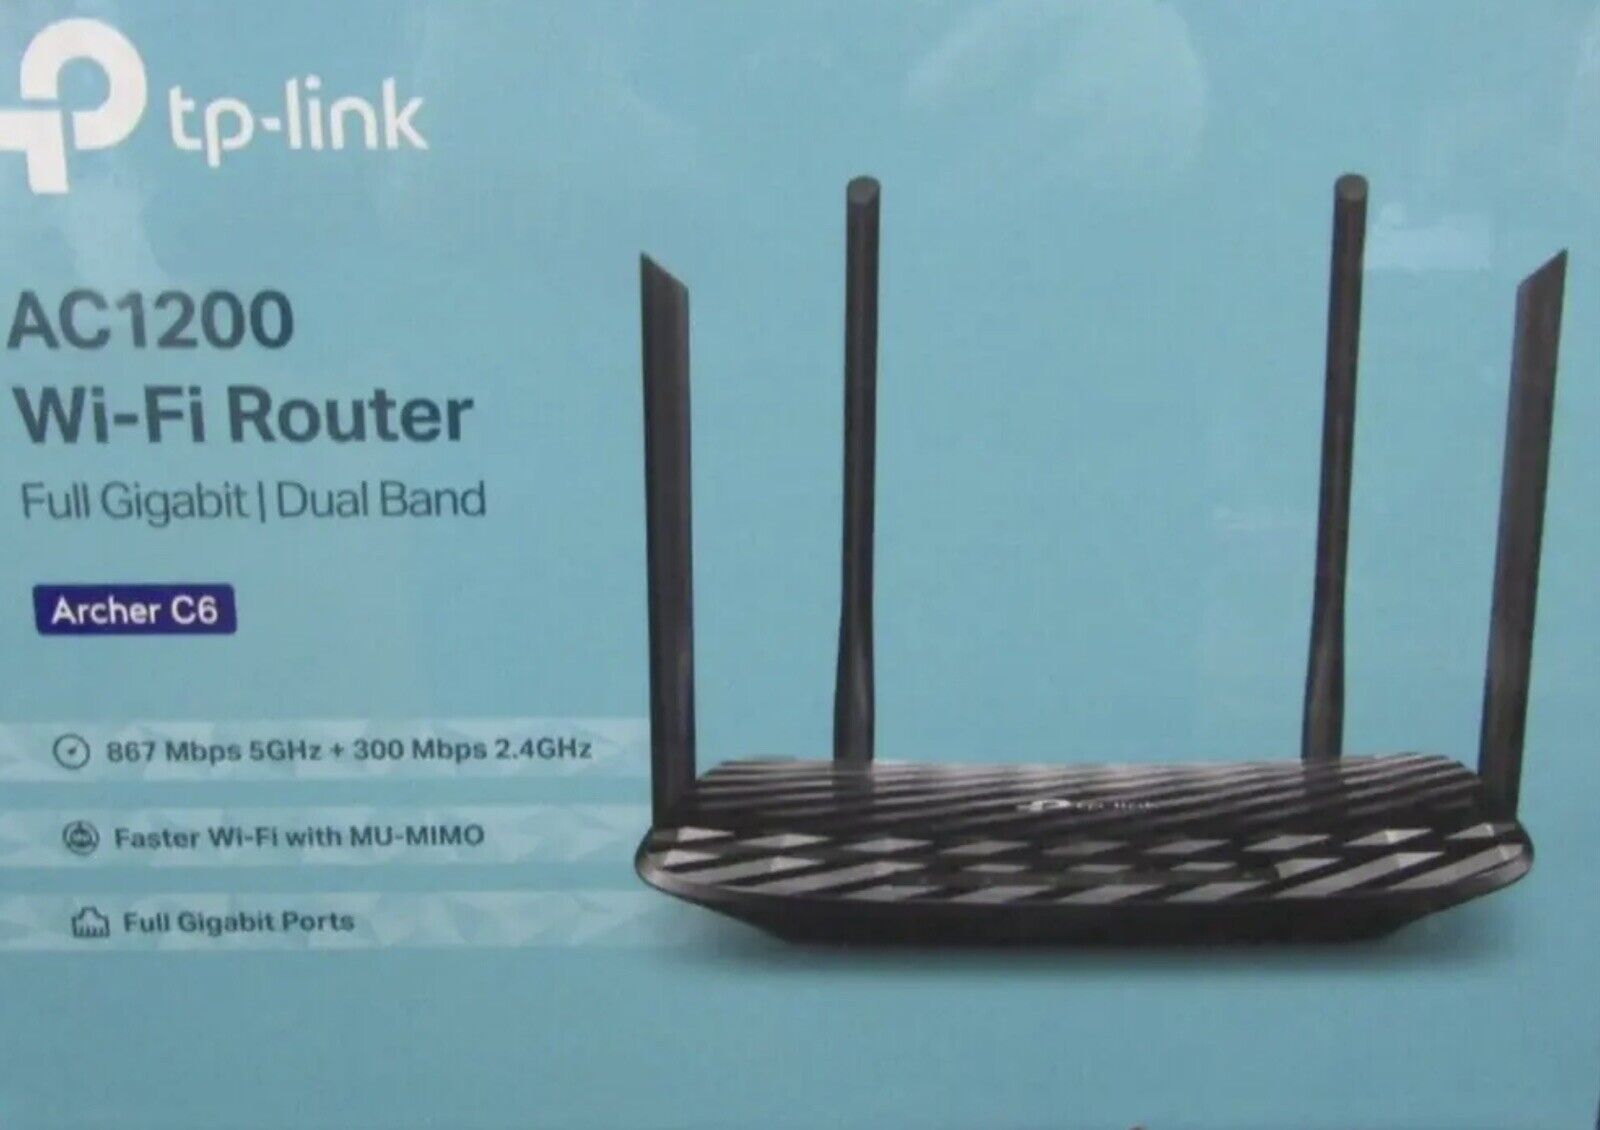 TP-Link - AC1200 - Wi-Fi Router Full Gigabit Dual Band - Archer C6